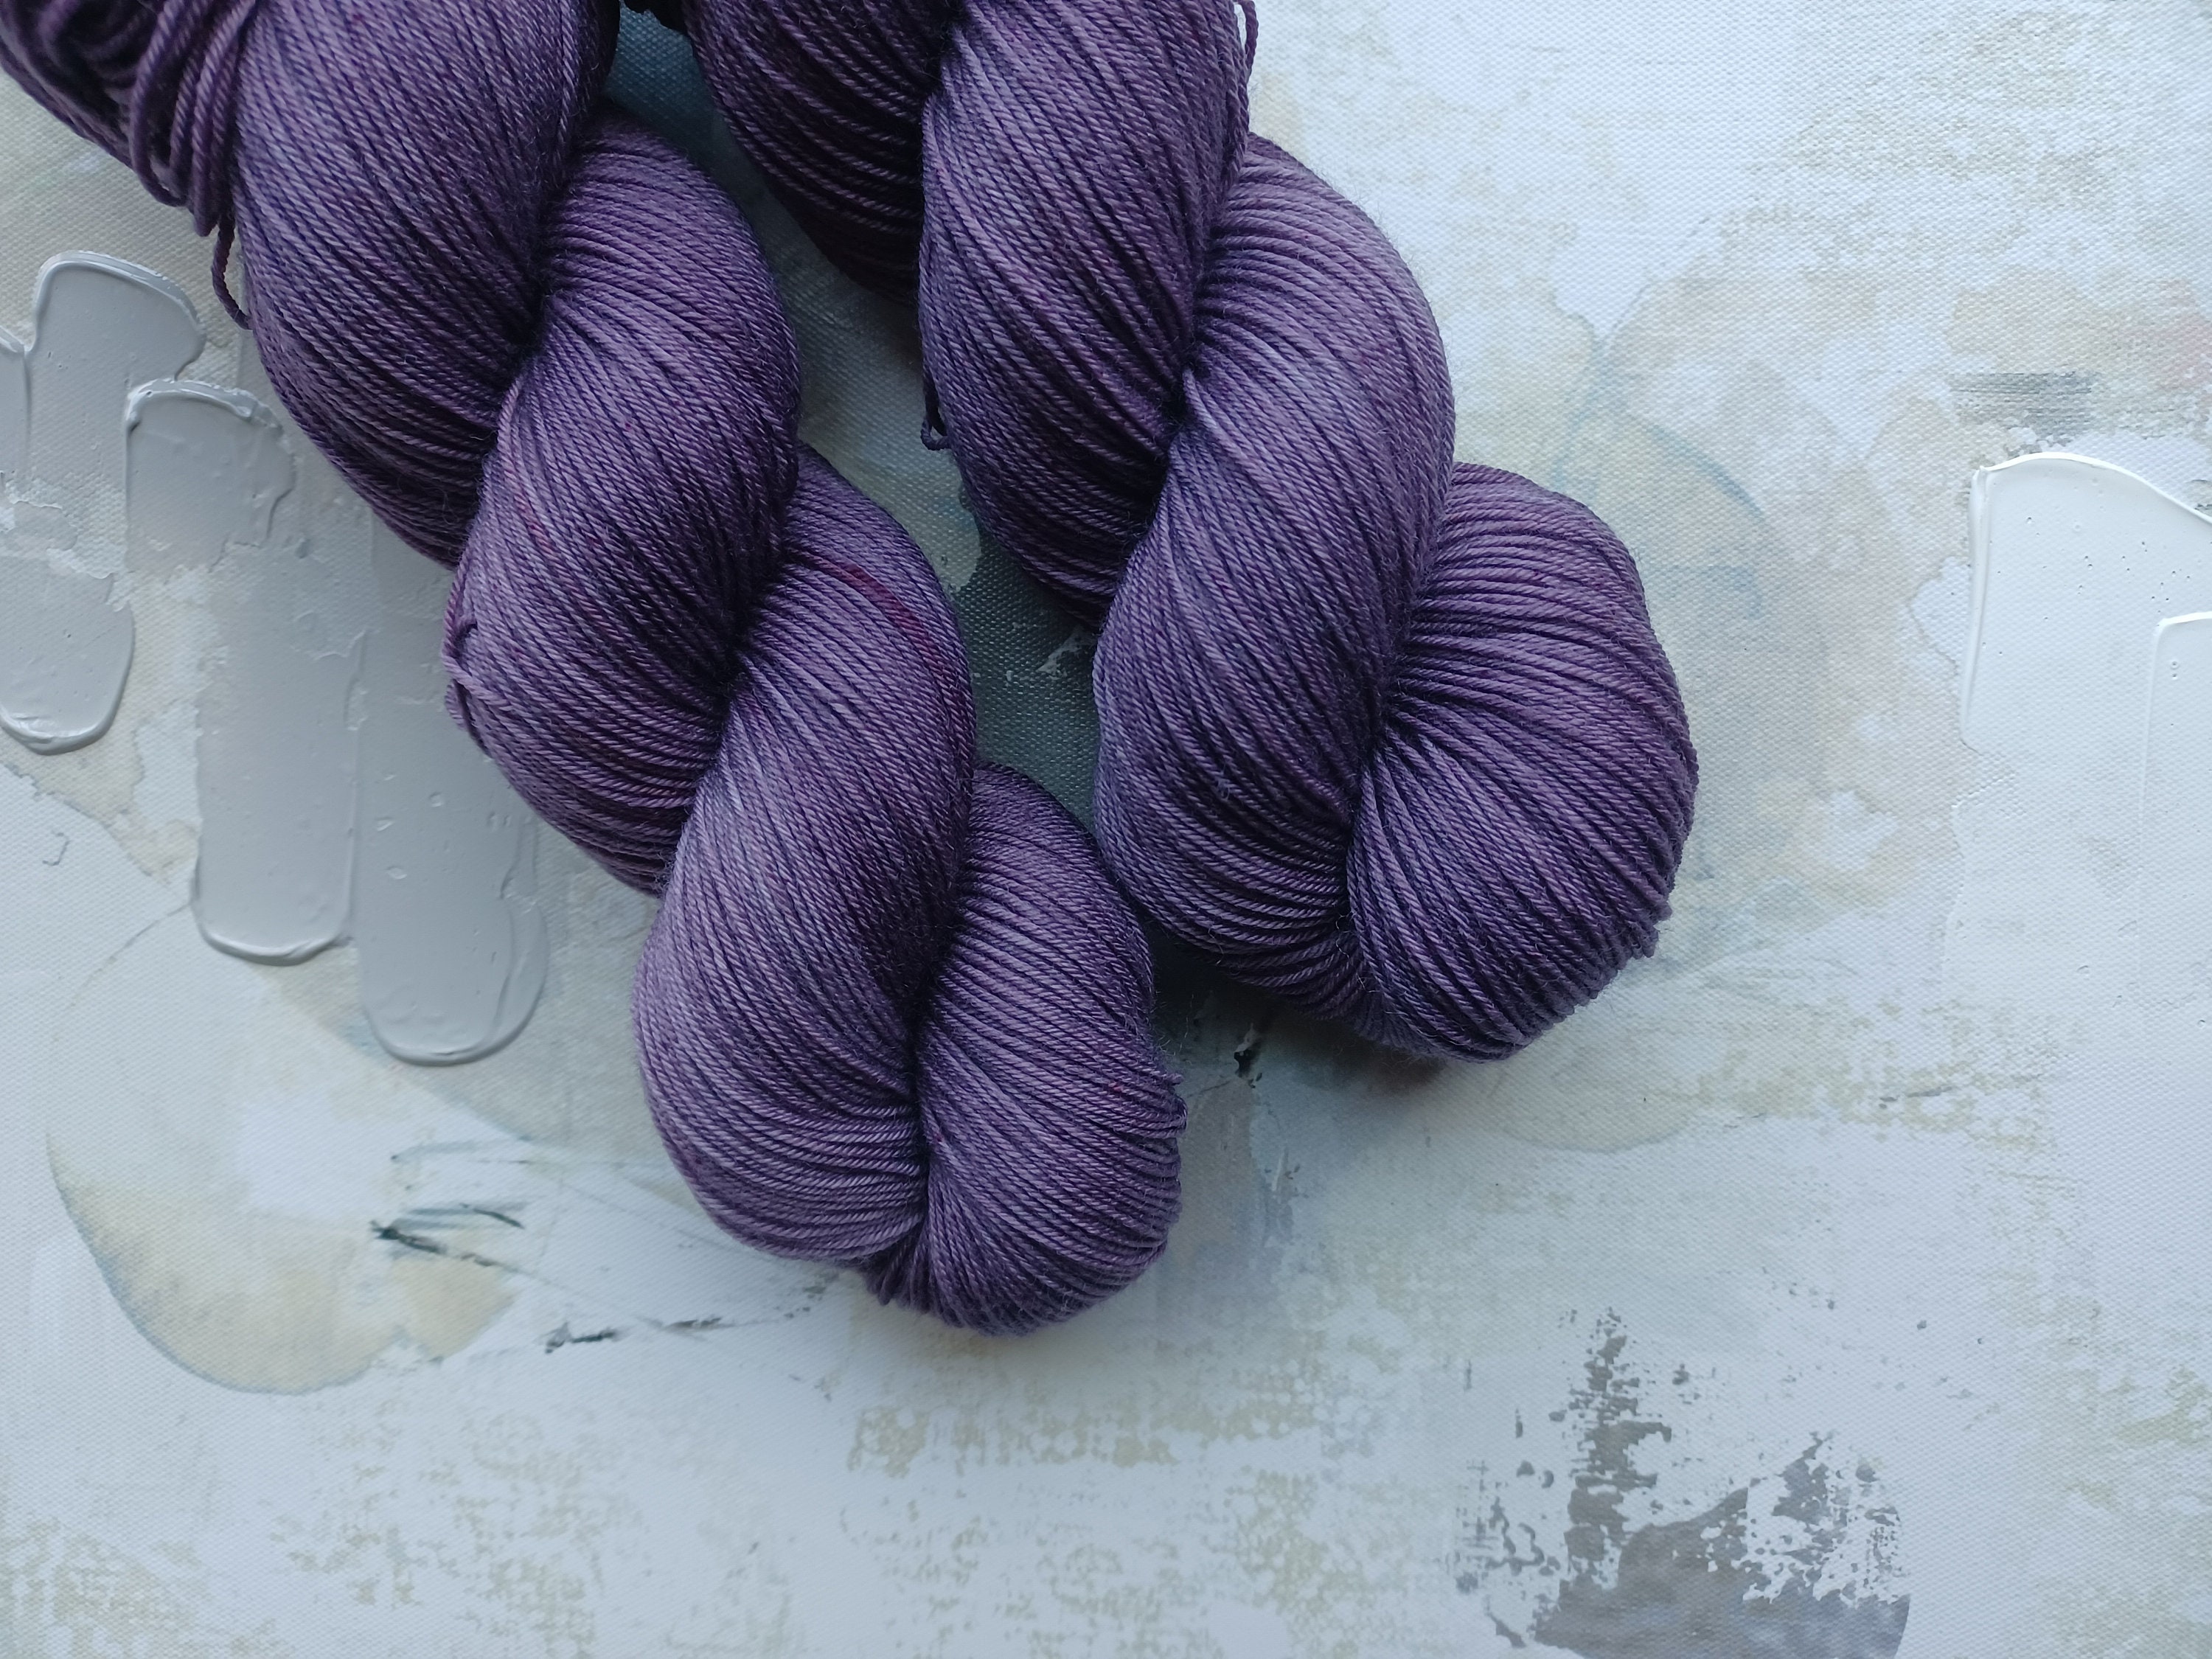 Mainstays 5 oz Sparkle Acyrilic Yarn, 97% Acyrilic 3% Other Fiber, Sweet Violet, Purple